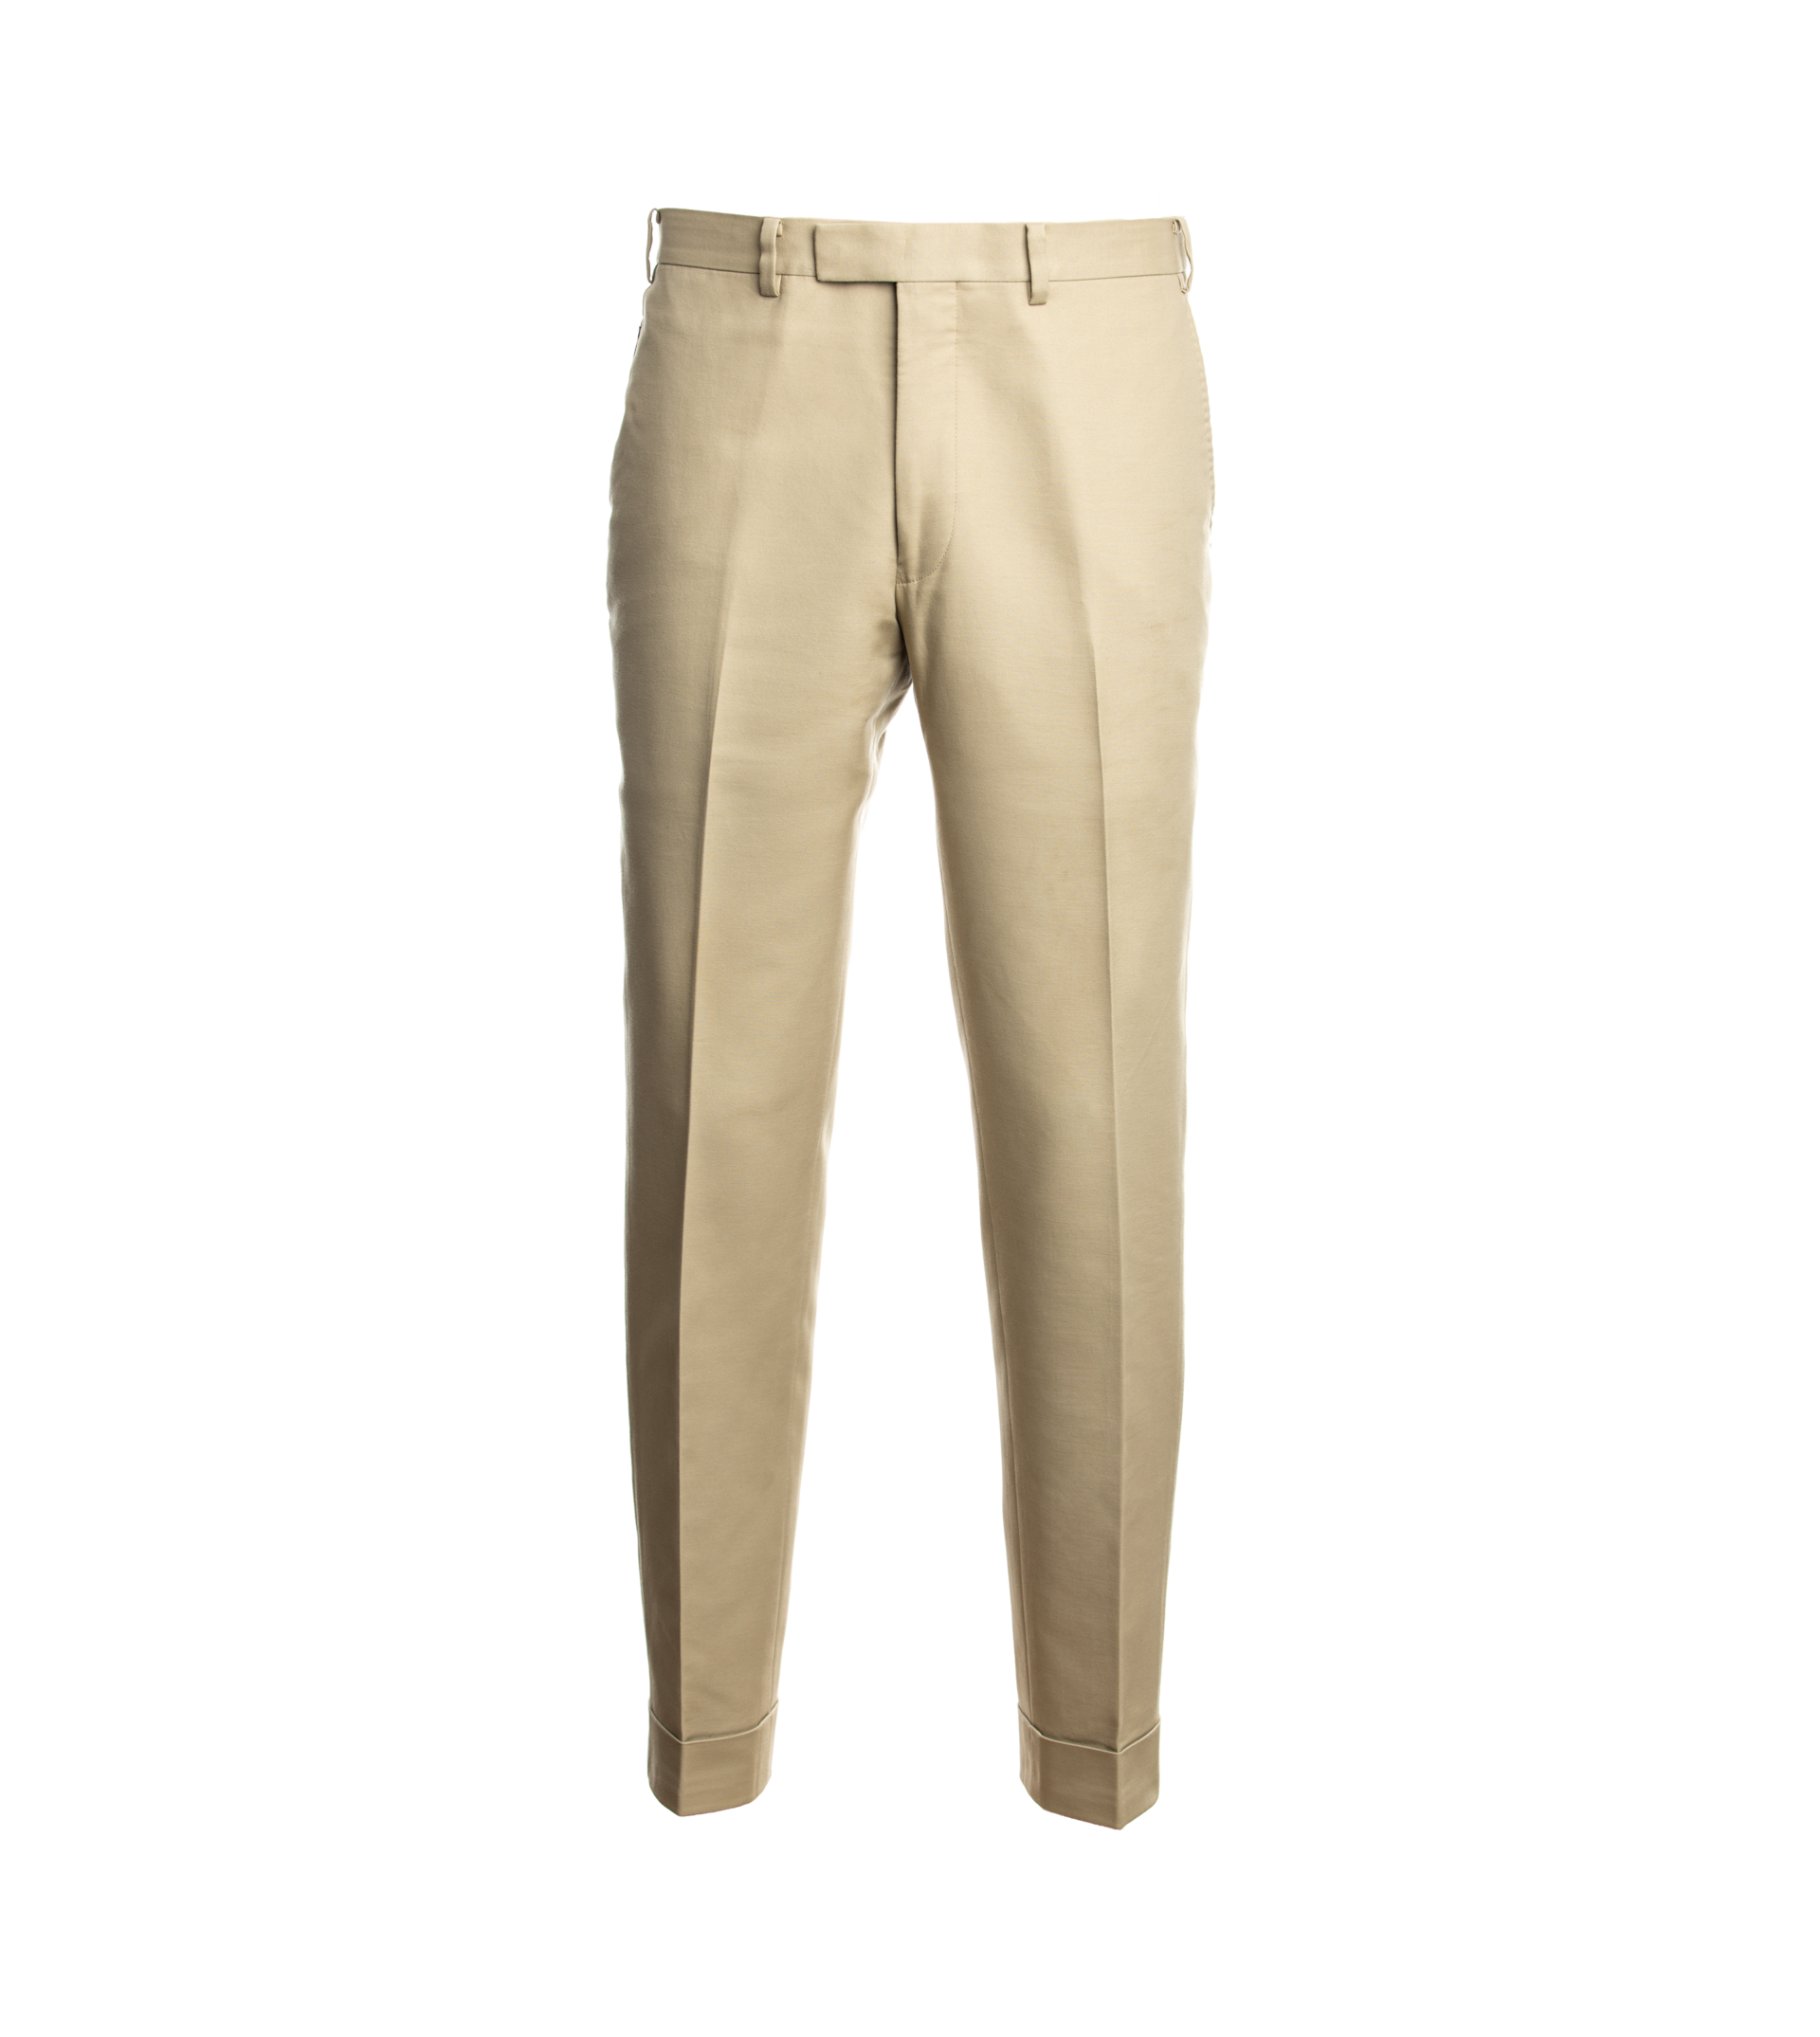 Regular Fit Cotton twill trousers - Light greige - Men | H&M IN